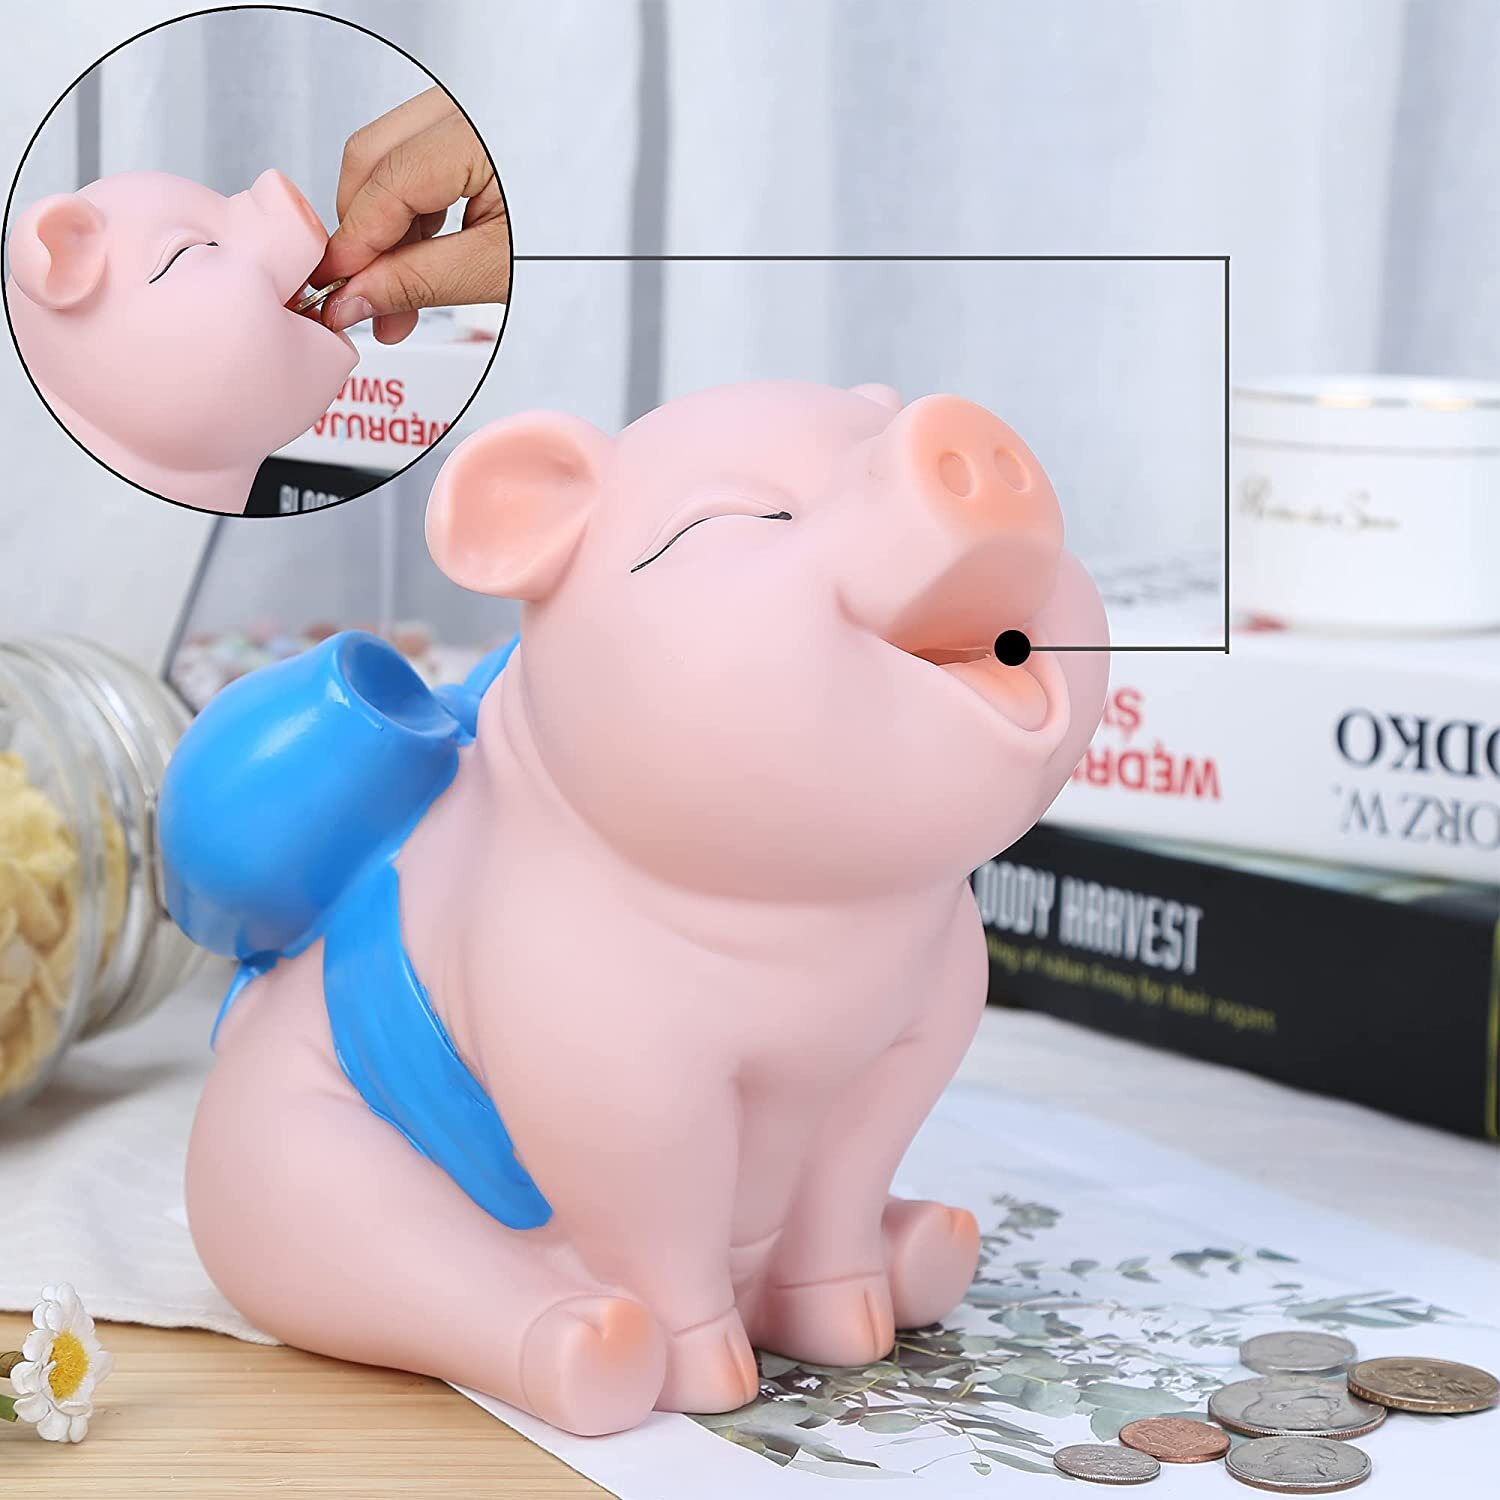 Piggy Bank Ceramic Space Ship Money Box Collectable Coin Bank in Gift Box